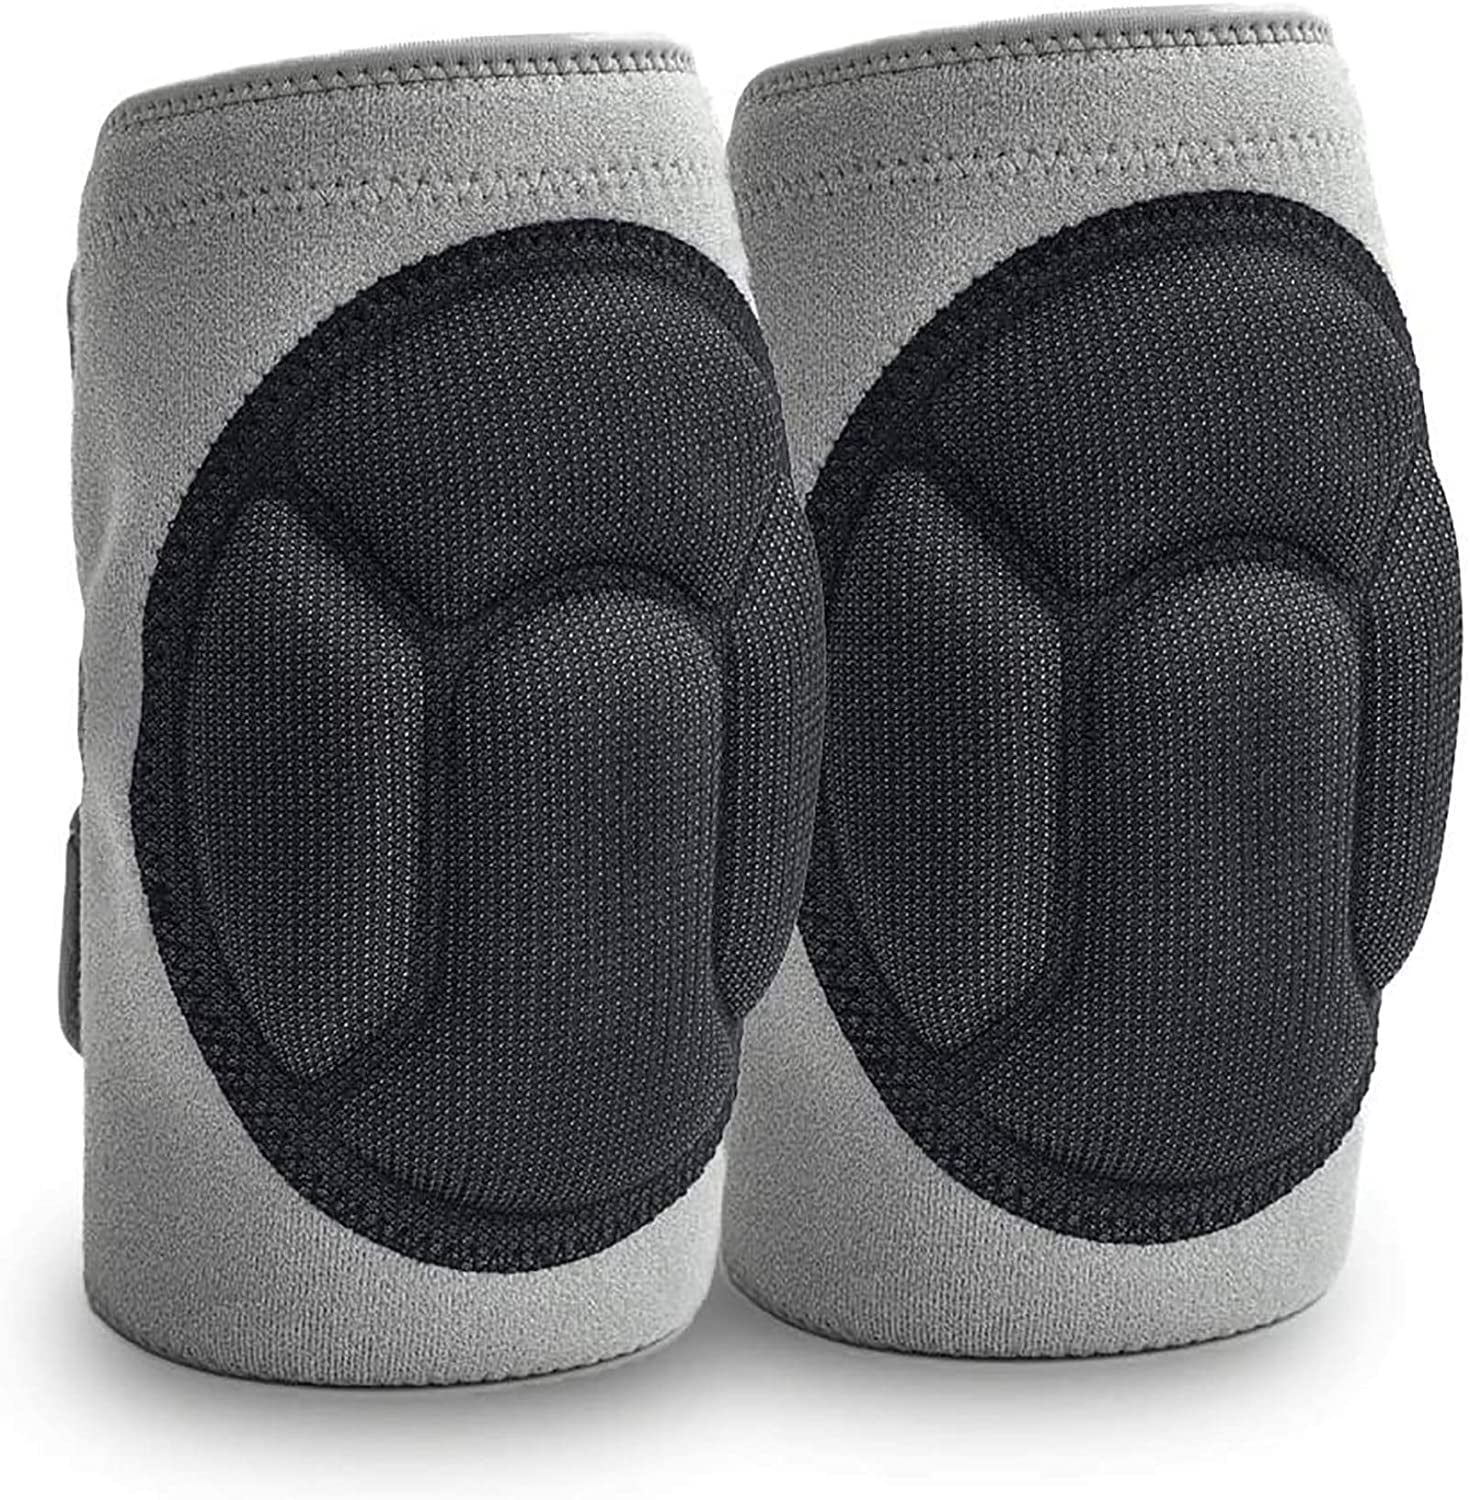 2Pcs Garden Knee Pads Weeding Knee Protective Pads Soft Ultra Comfort Cushion 